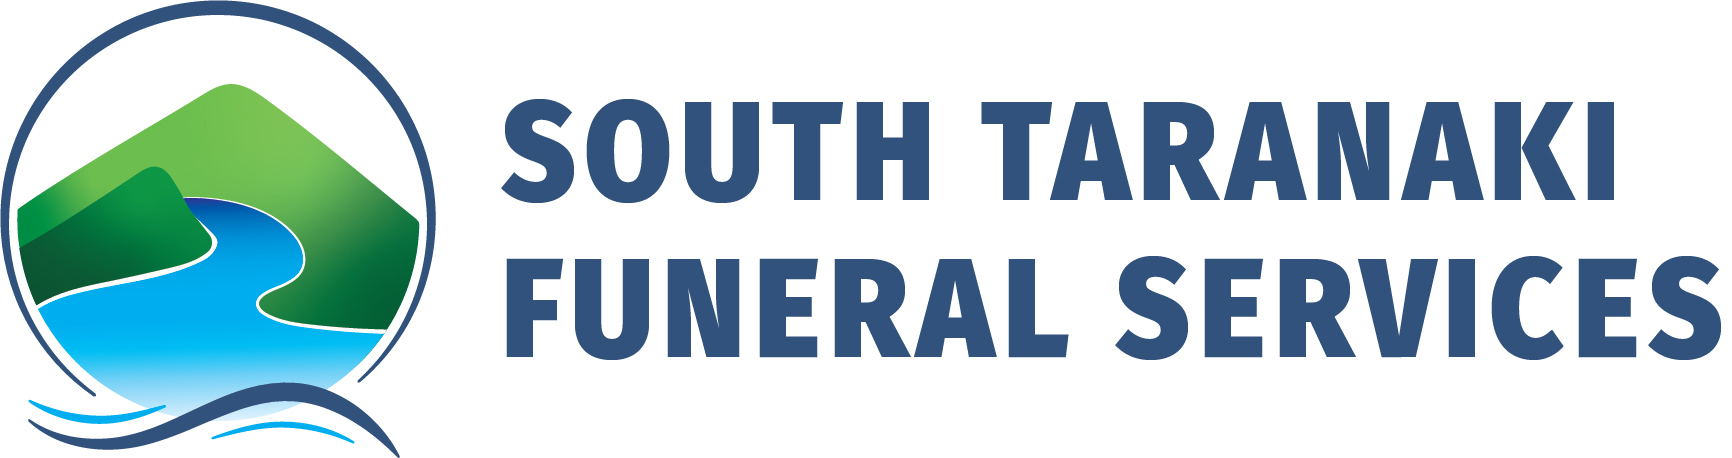 South Taranaki Funeral Services Logo